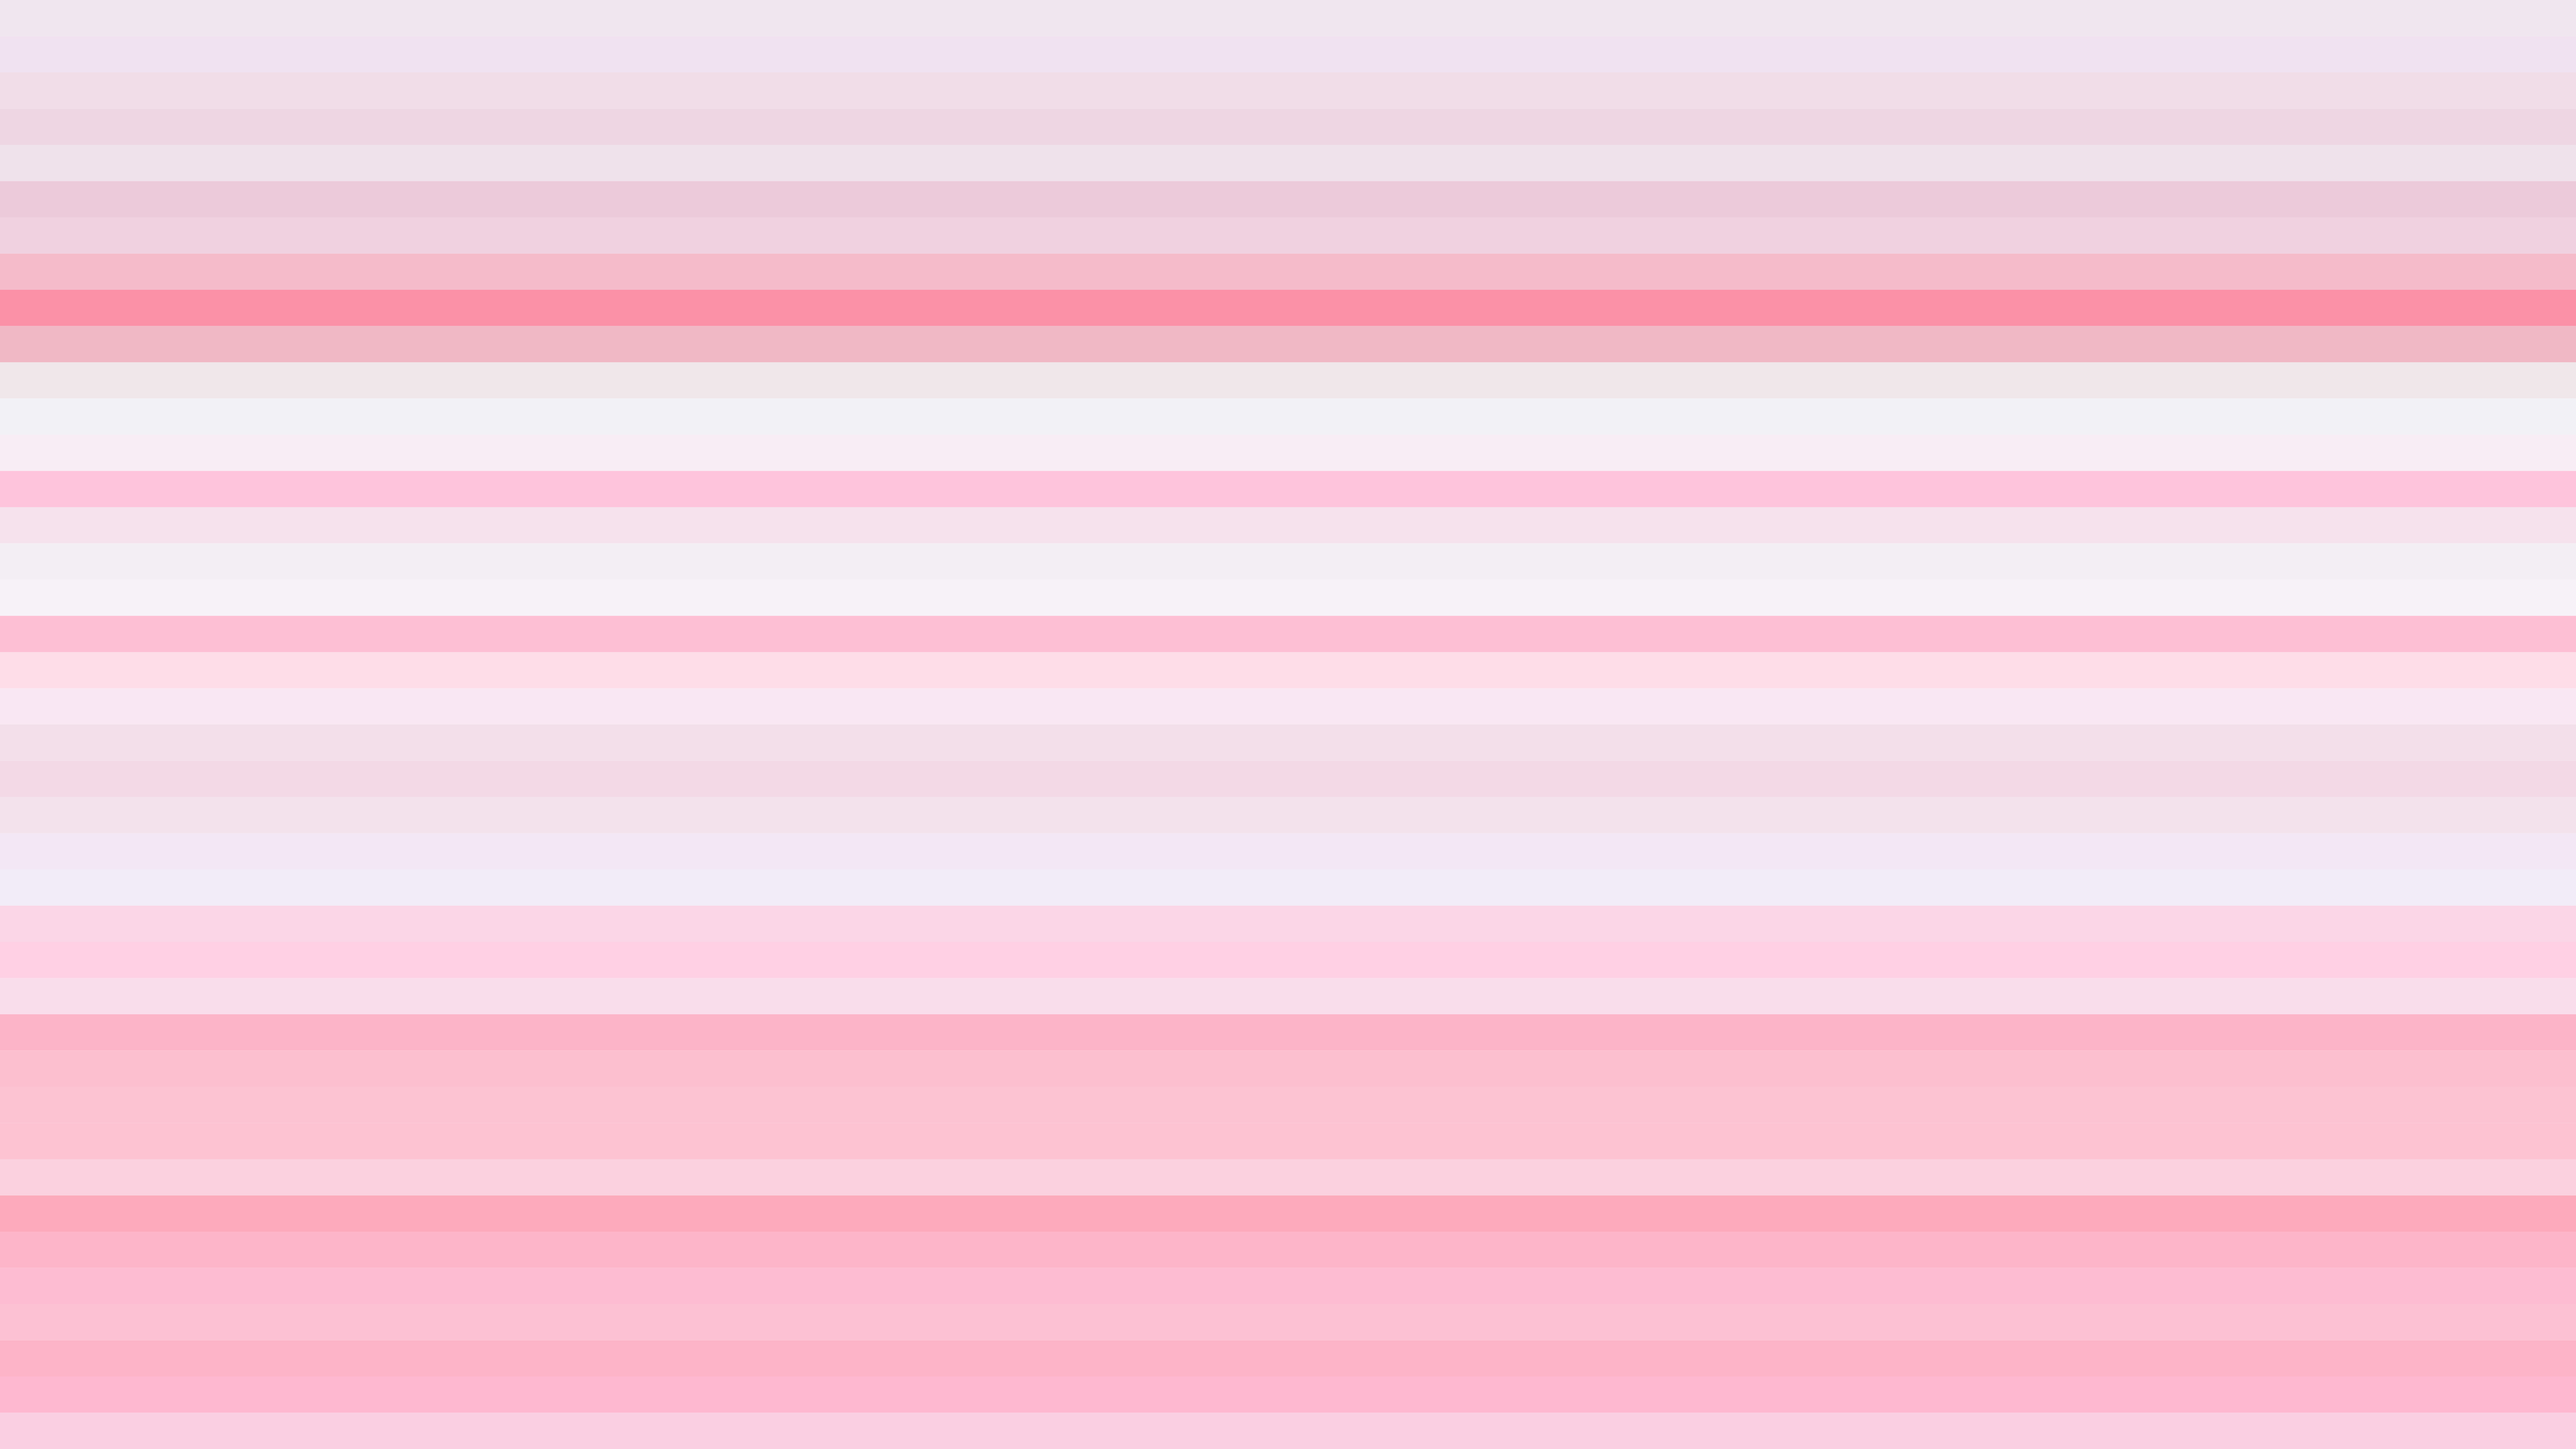 Free Pink and White Horizontal Stripes Background Illustrator